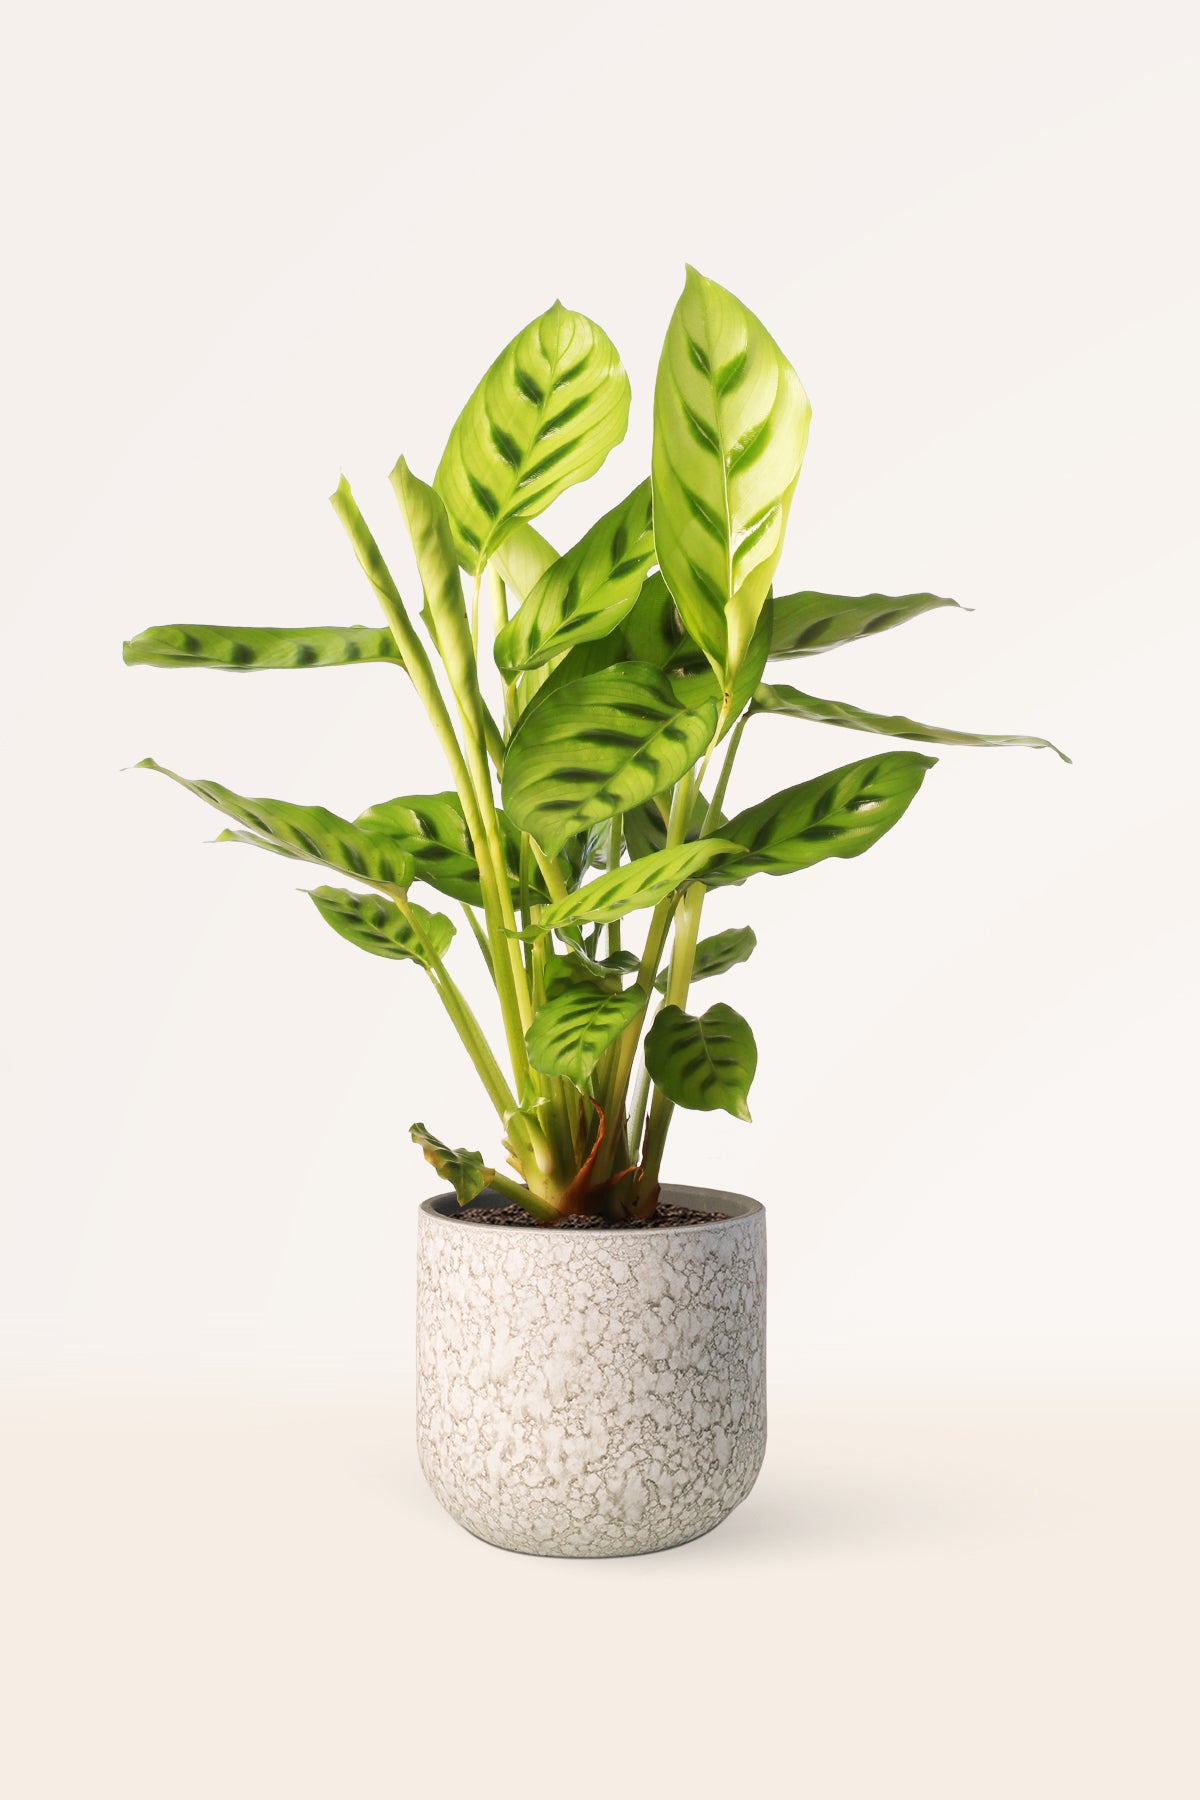 Calathea Leopardina | Comprar plantas online | Plantas de interior |  APRILPLANTS